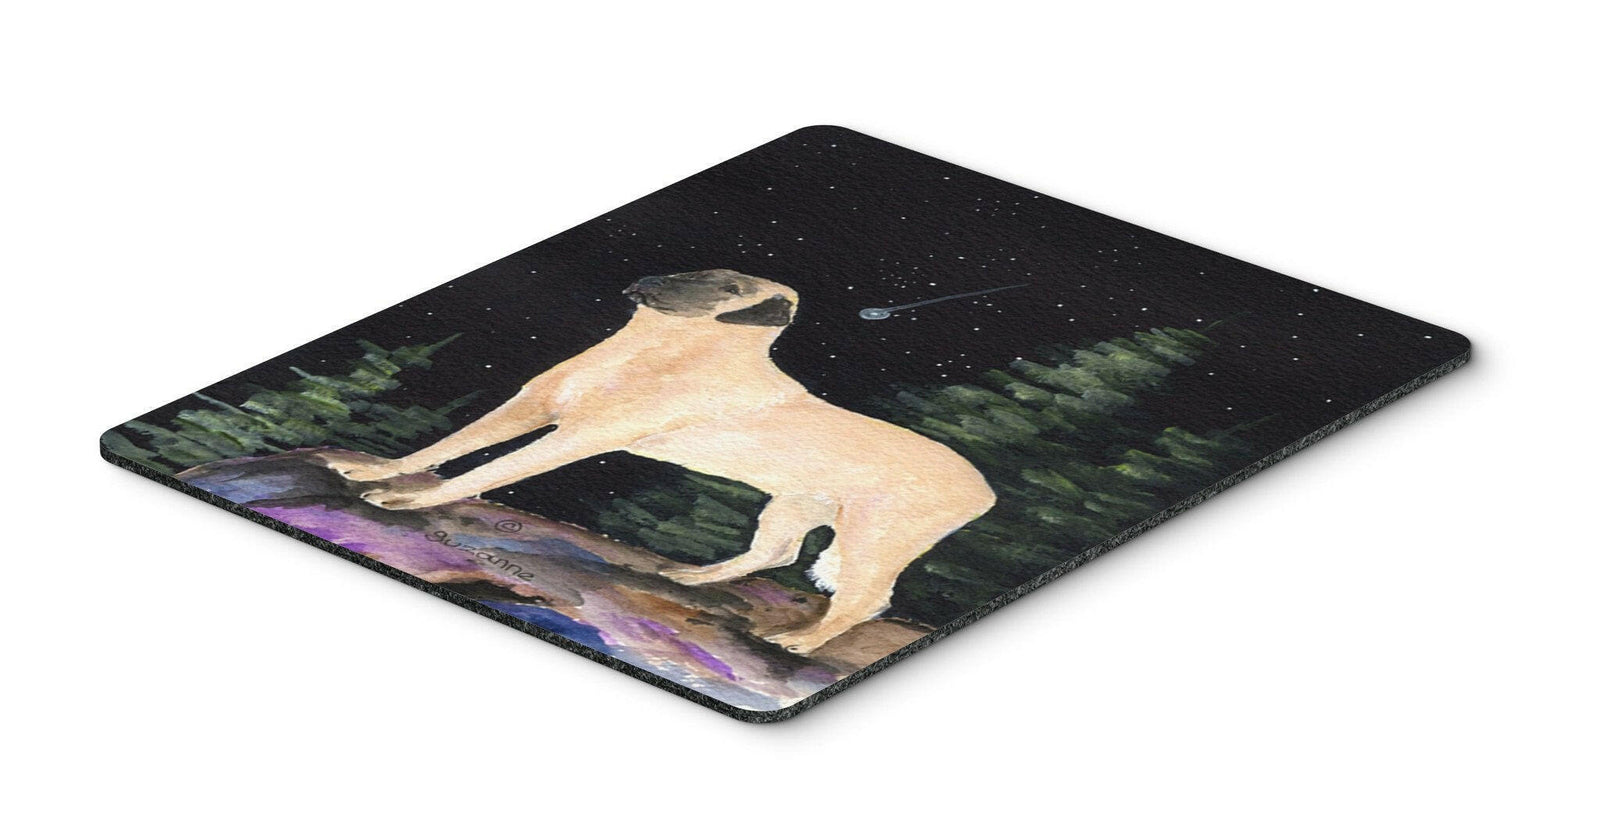 Starry Night Anatolian Shepherd Mouse Pad / Hot Pad / Trivet by Caroline's Treasures